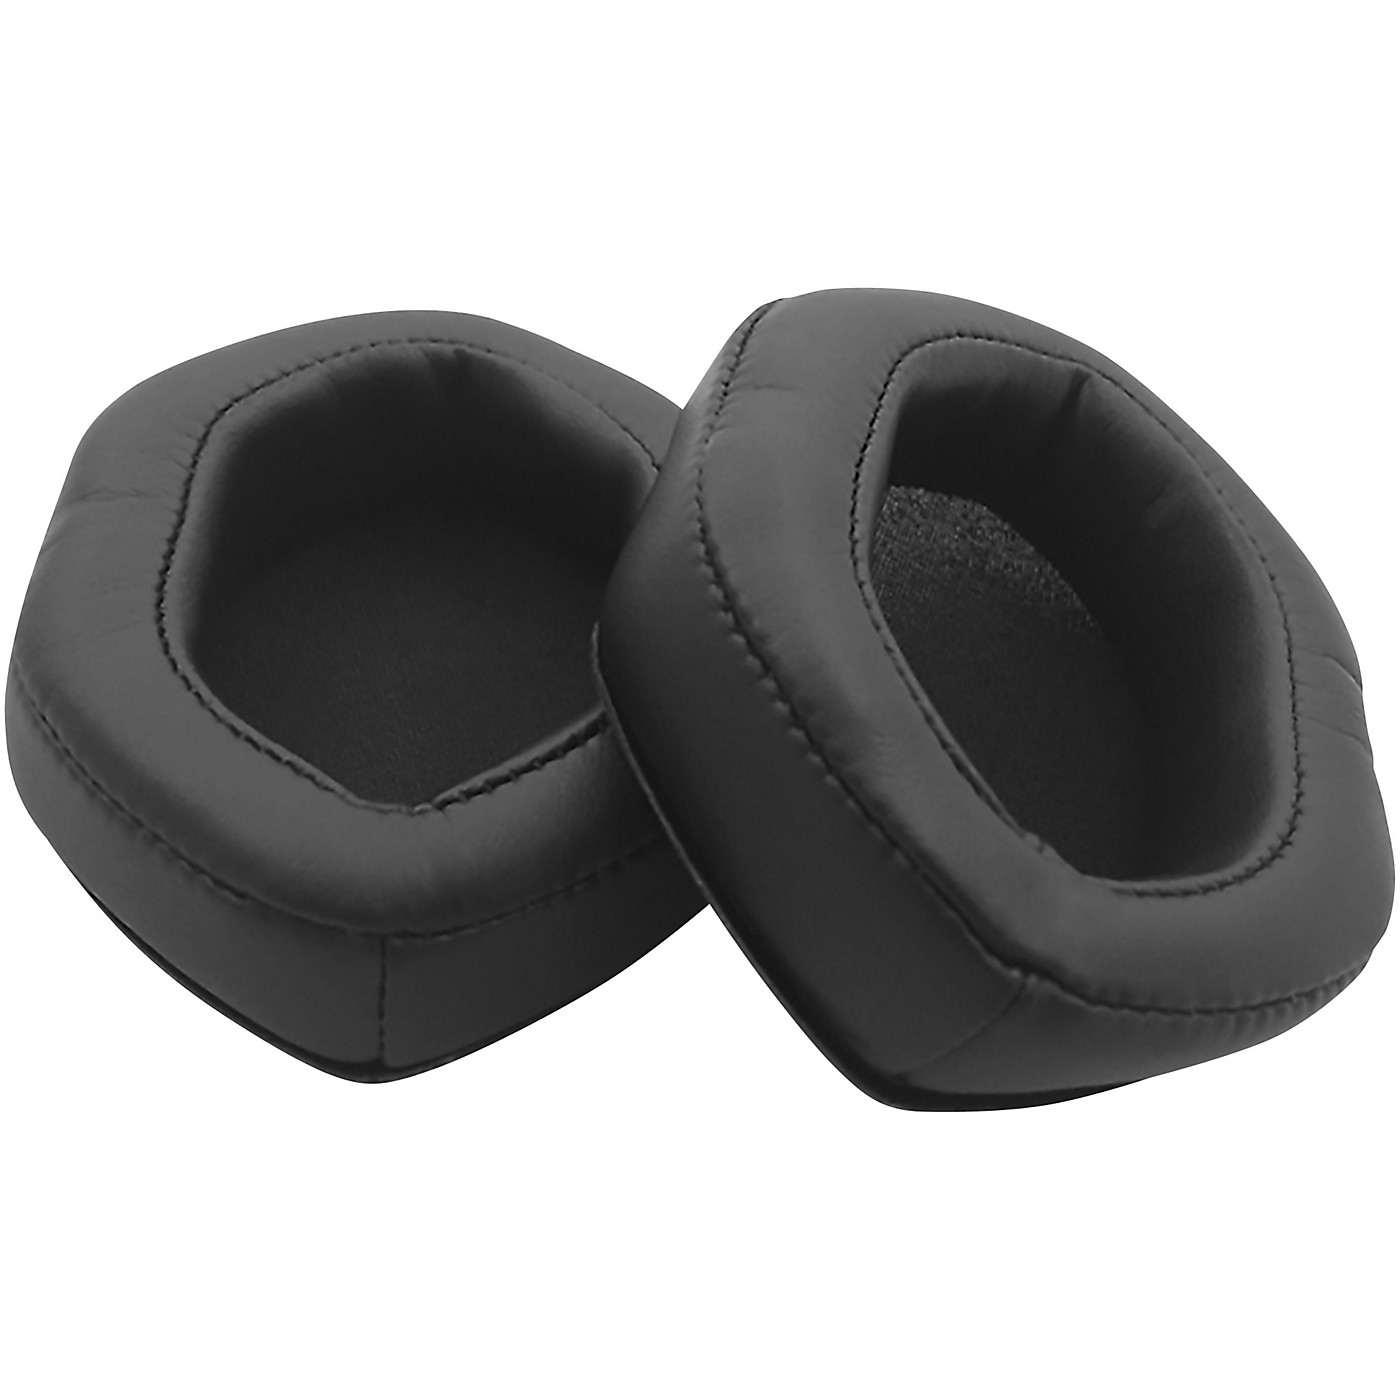 V-MODA XL Memory Foam Cushion Accessory for V-MODA Over-Ear Headphones thumbnail